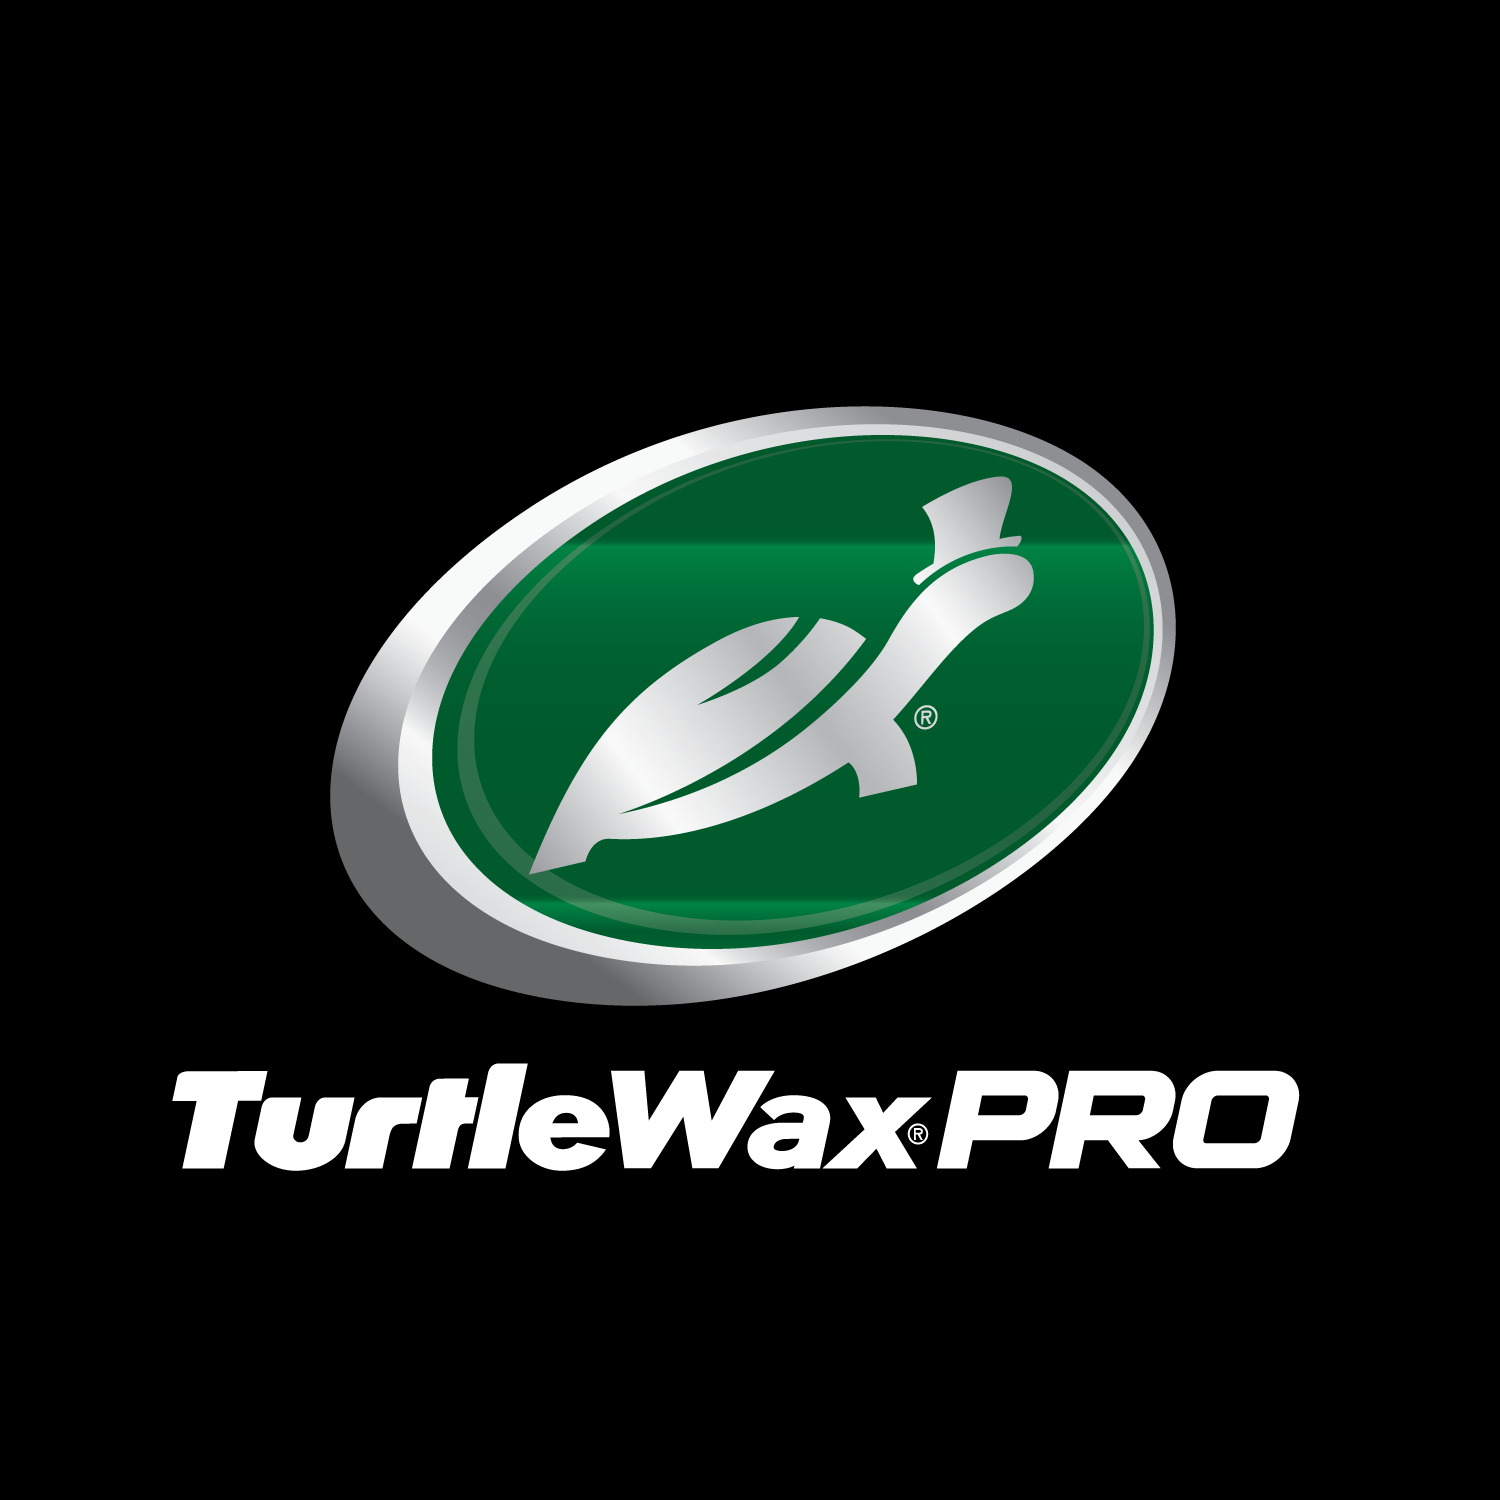 Turtle Wax Logo